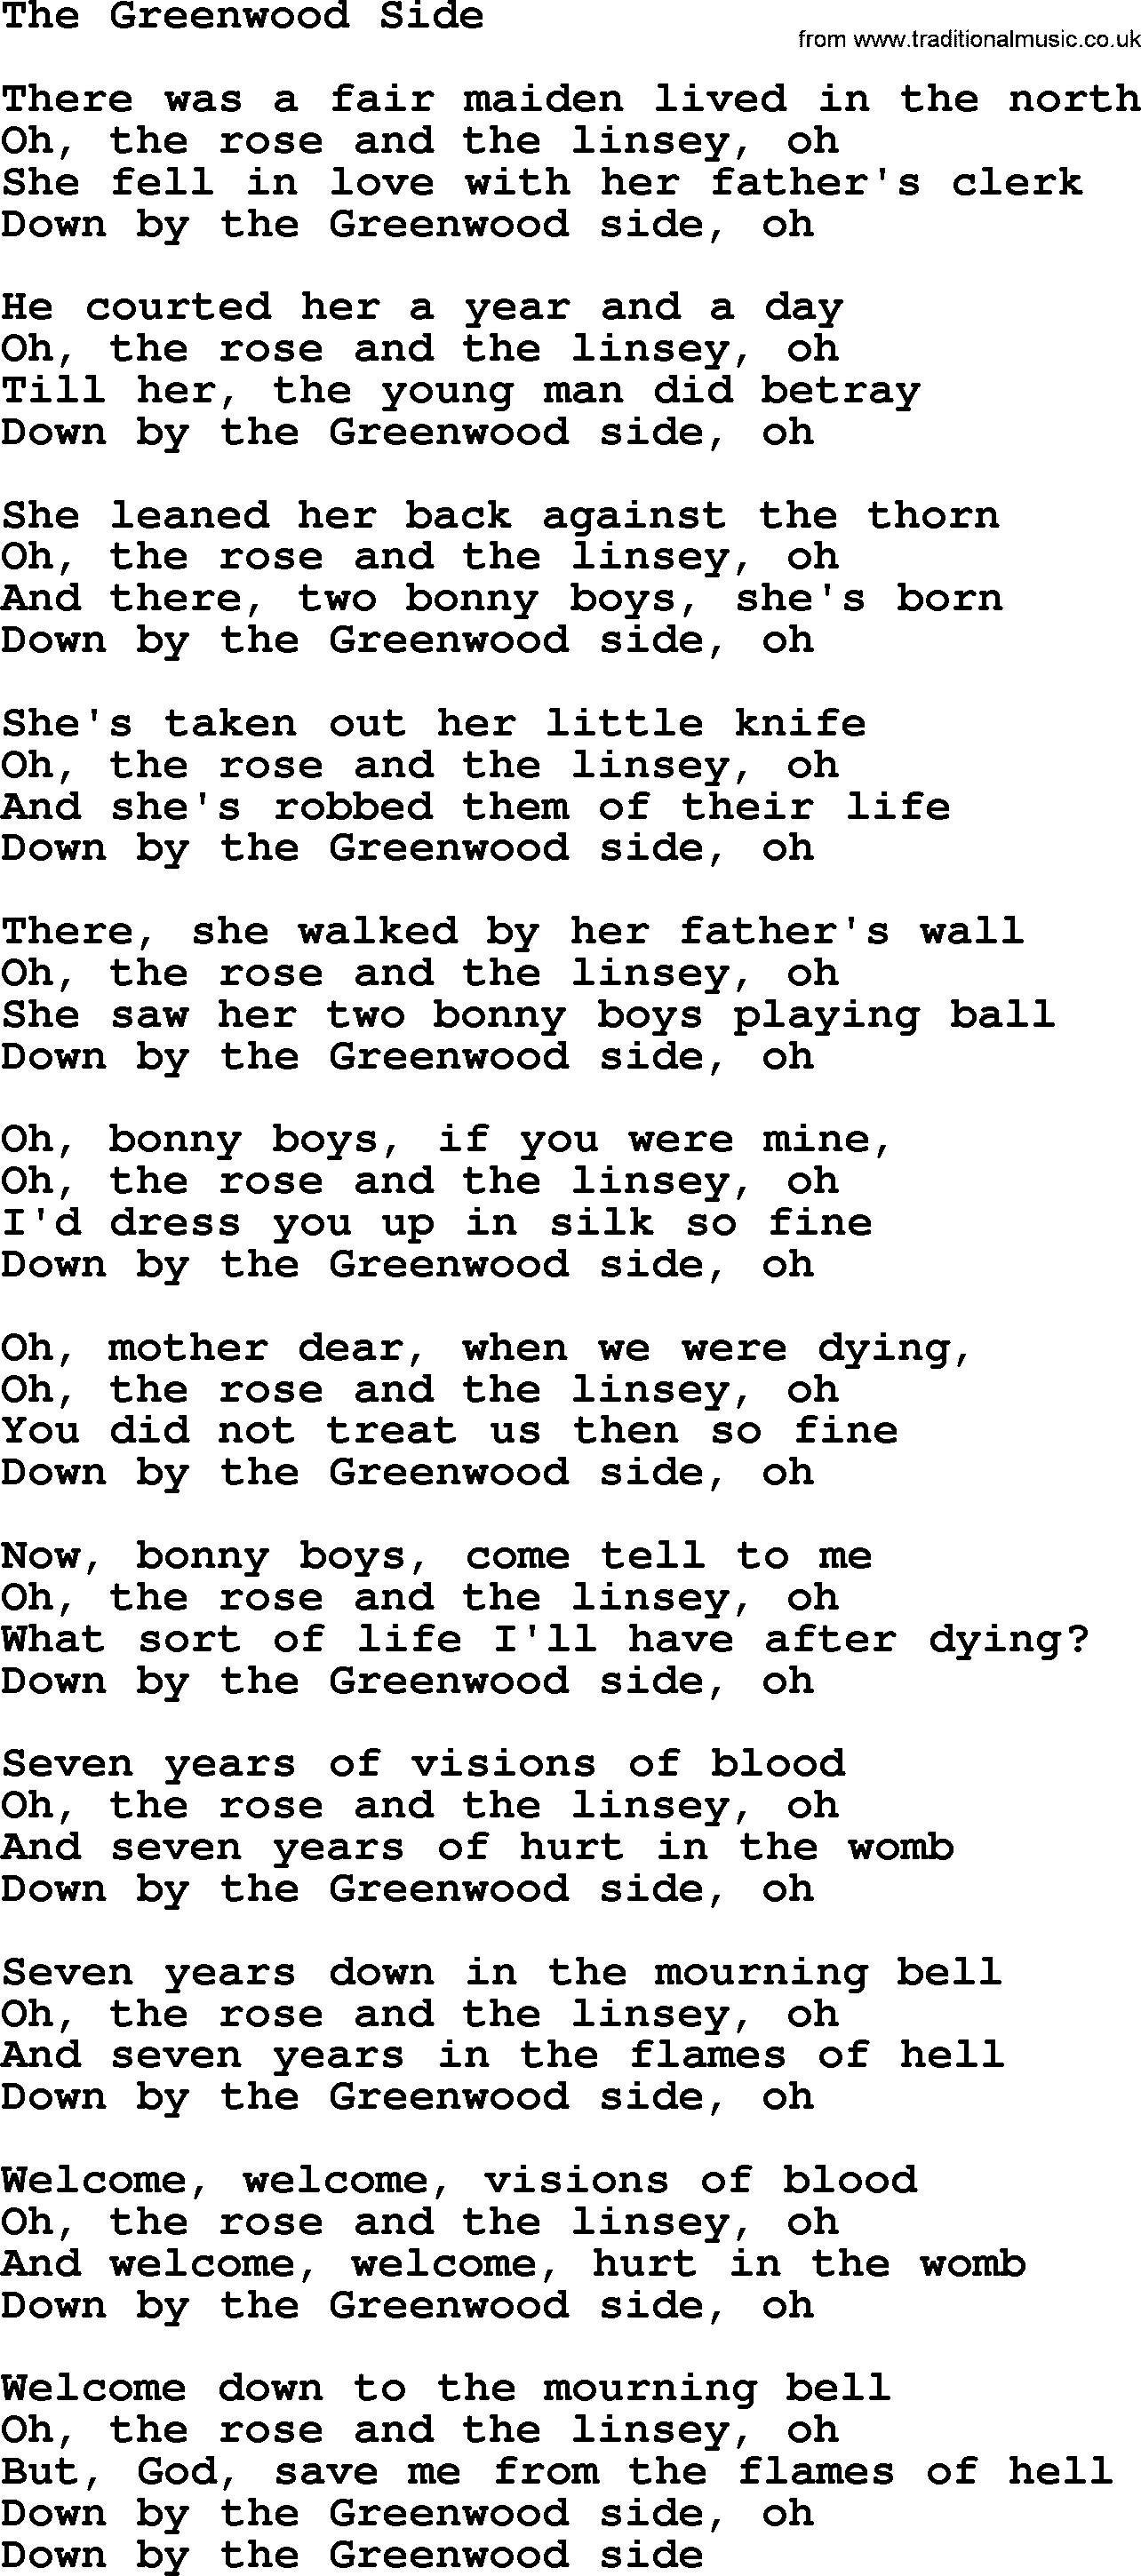 Joan Baez song The Greenwood Side, lyrics